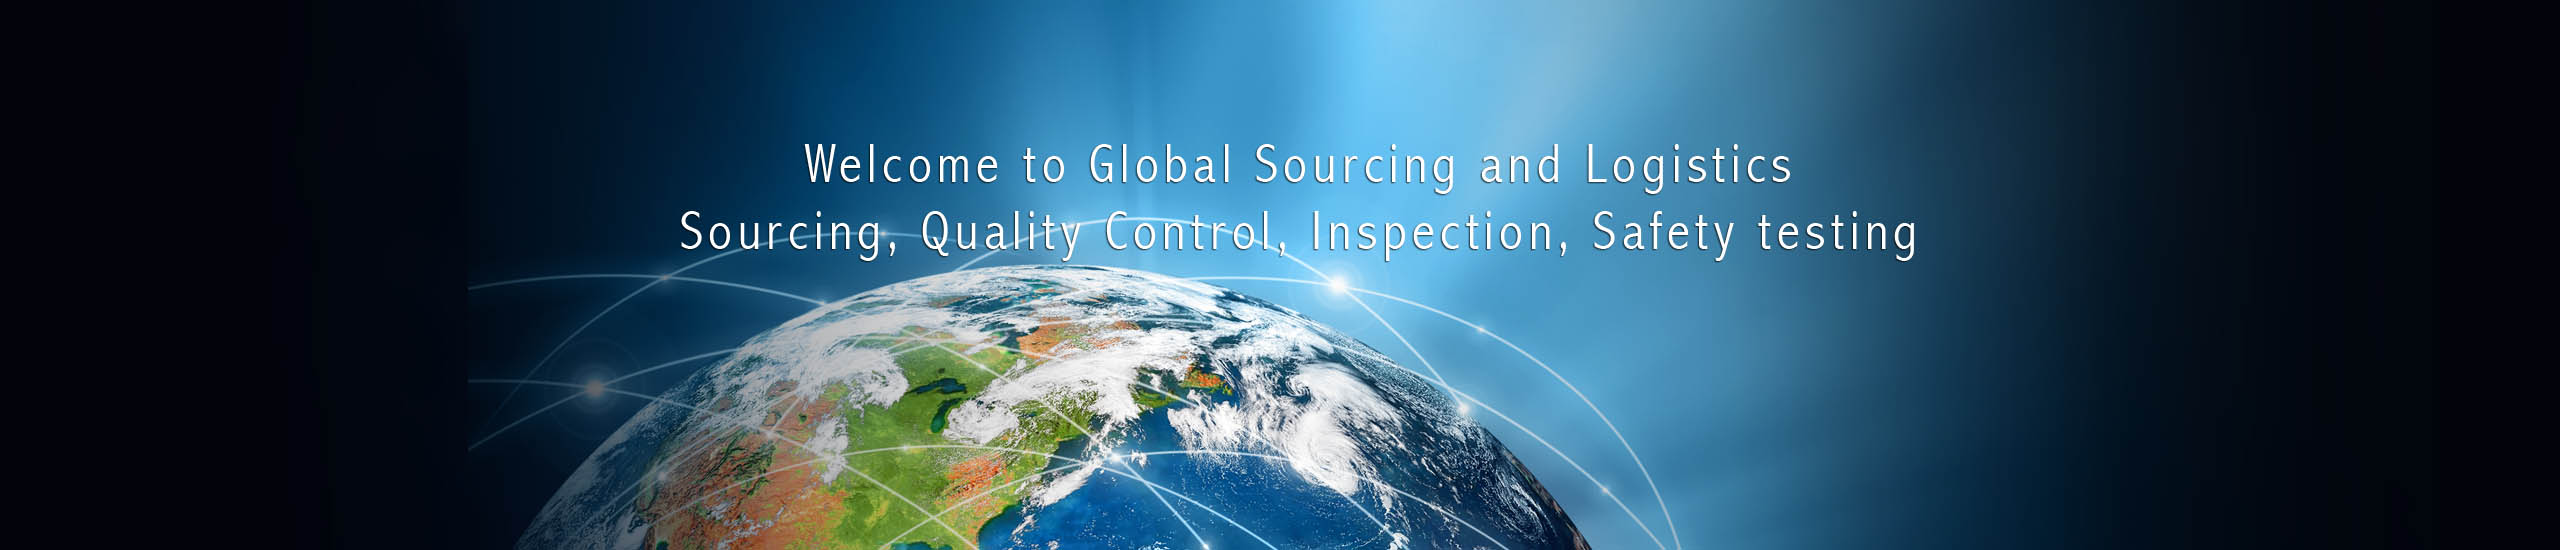 Global Sourcing and Logistics